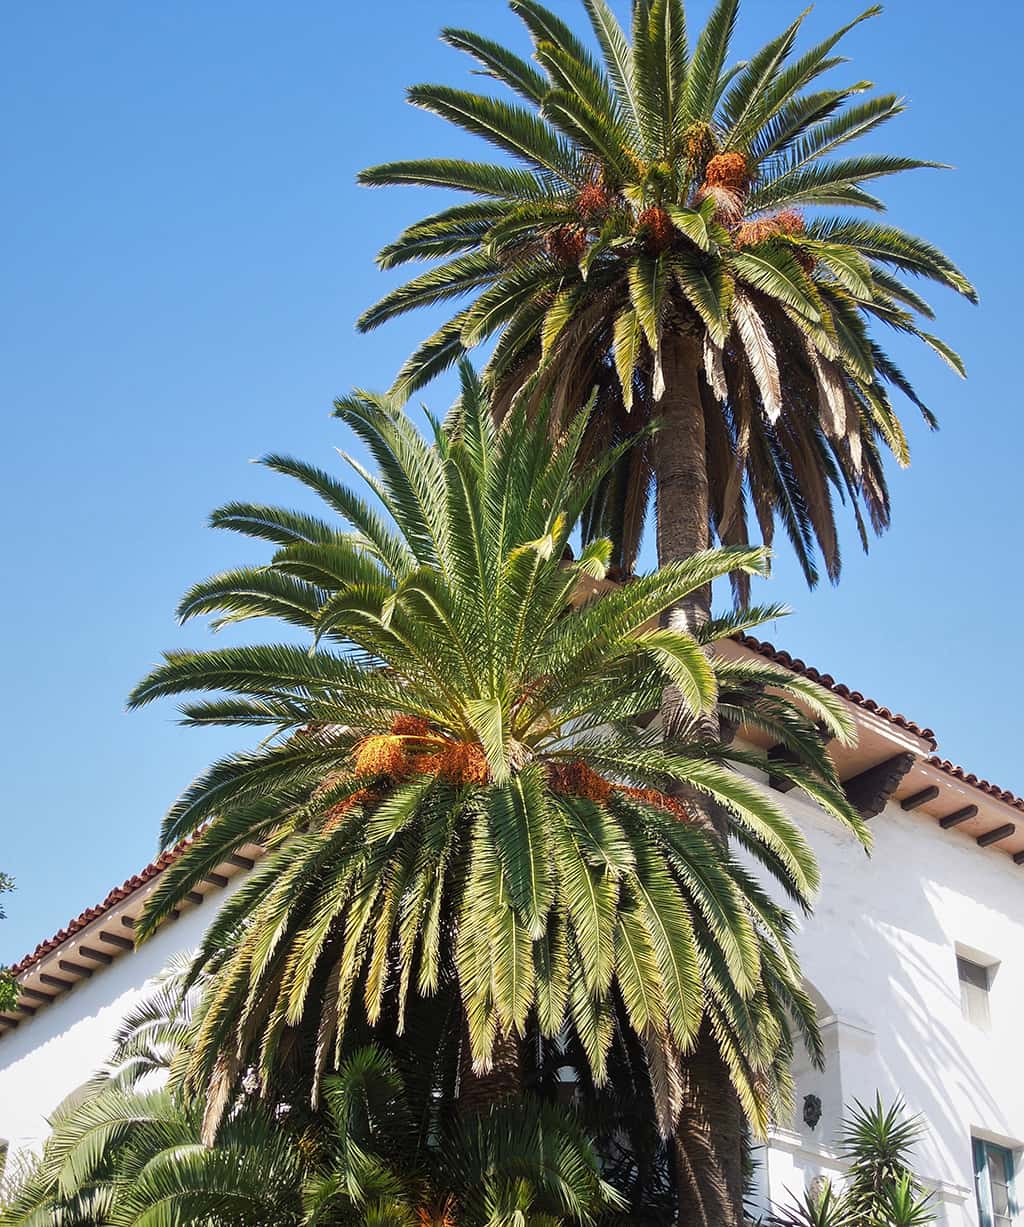 Canary Island Date Palms by David Gress